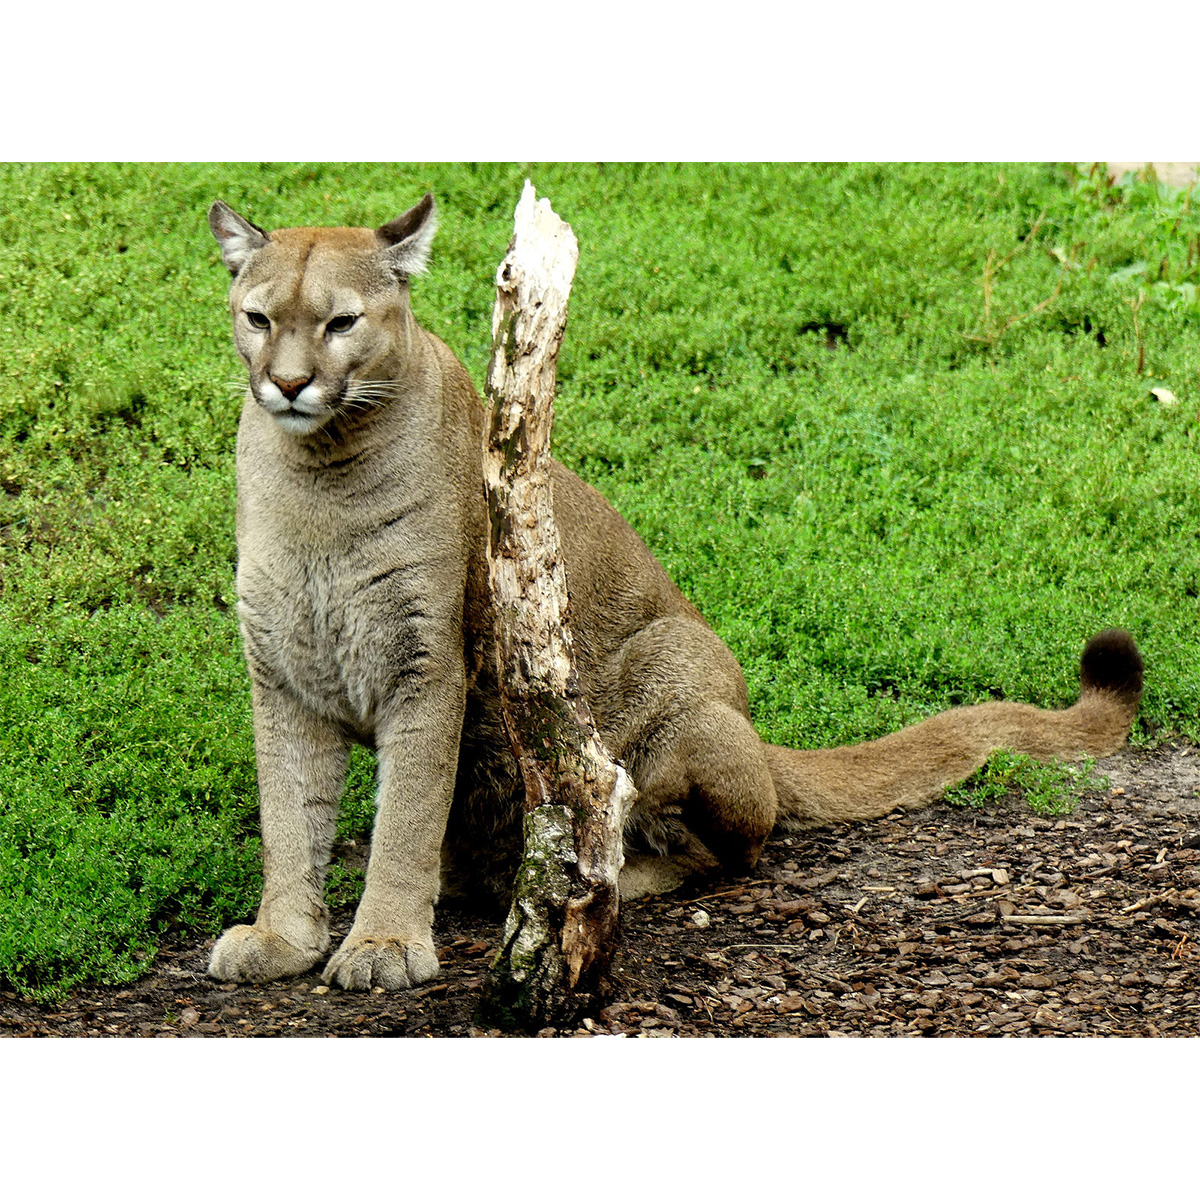 Пума / Горный лев / Кугуар (Puma concolor) Фото №6